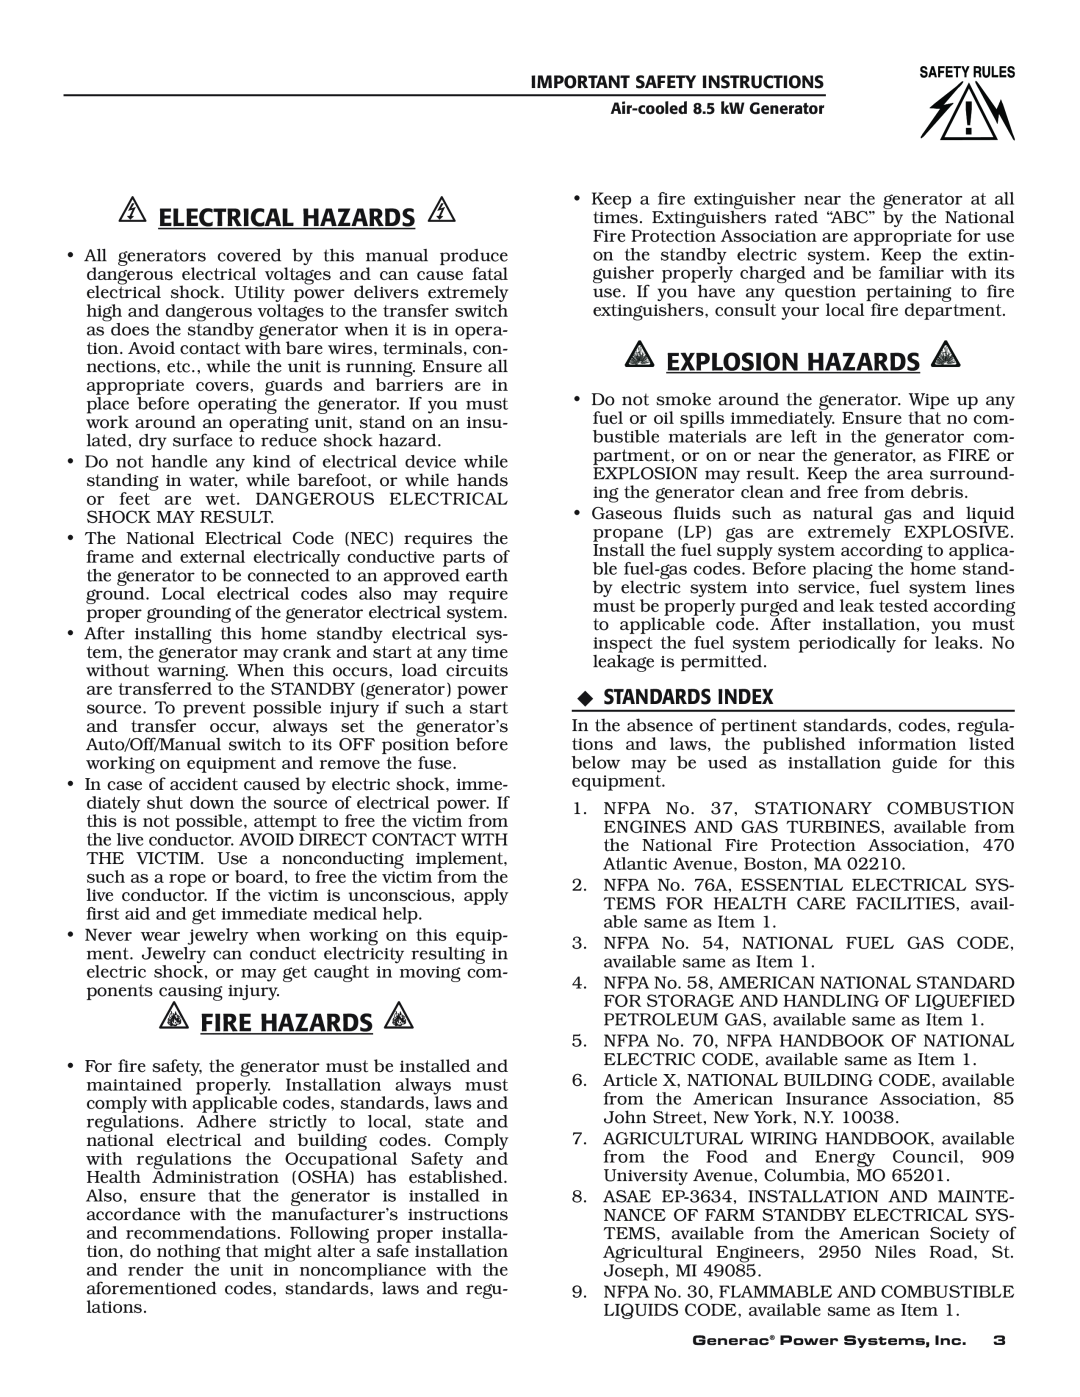 Generac 004692-0 owner manual Electrical Hazards, Fire Hazards, Explosion Hazards, Standards Index 